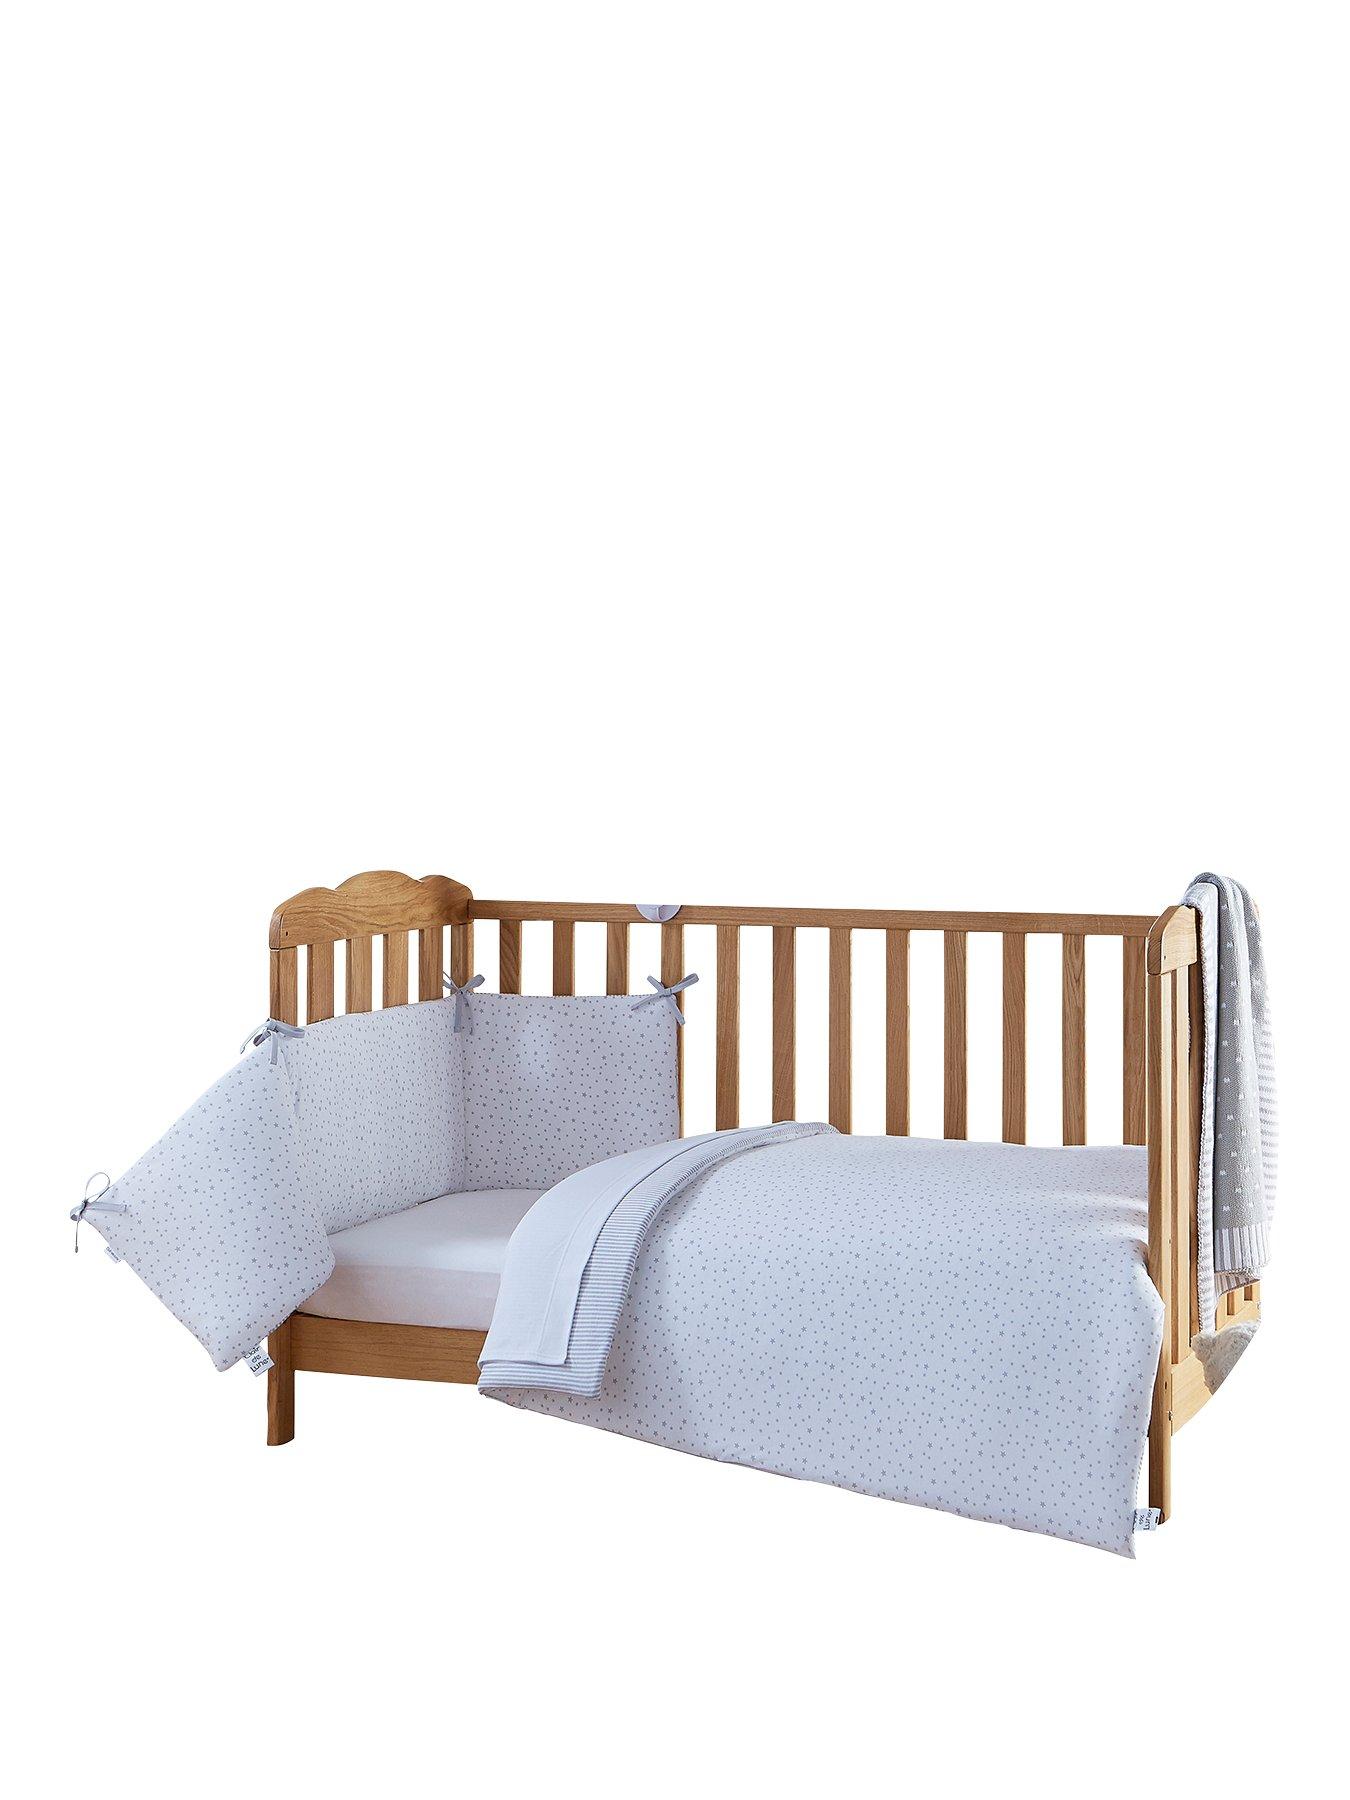 cot bed bedding set